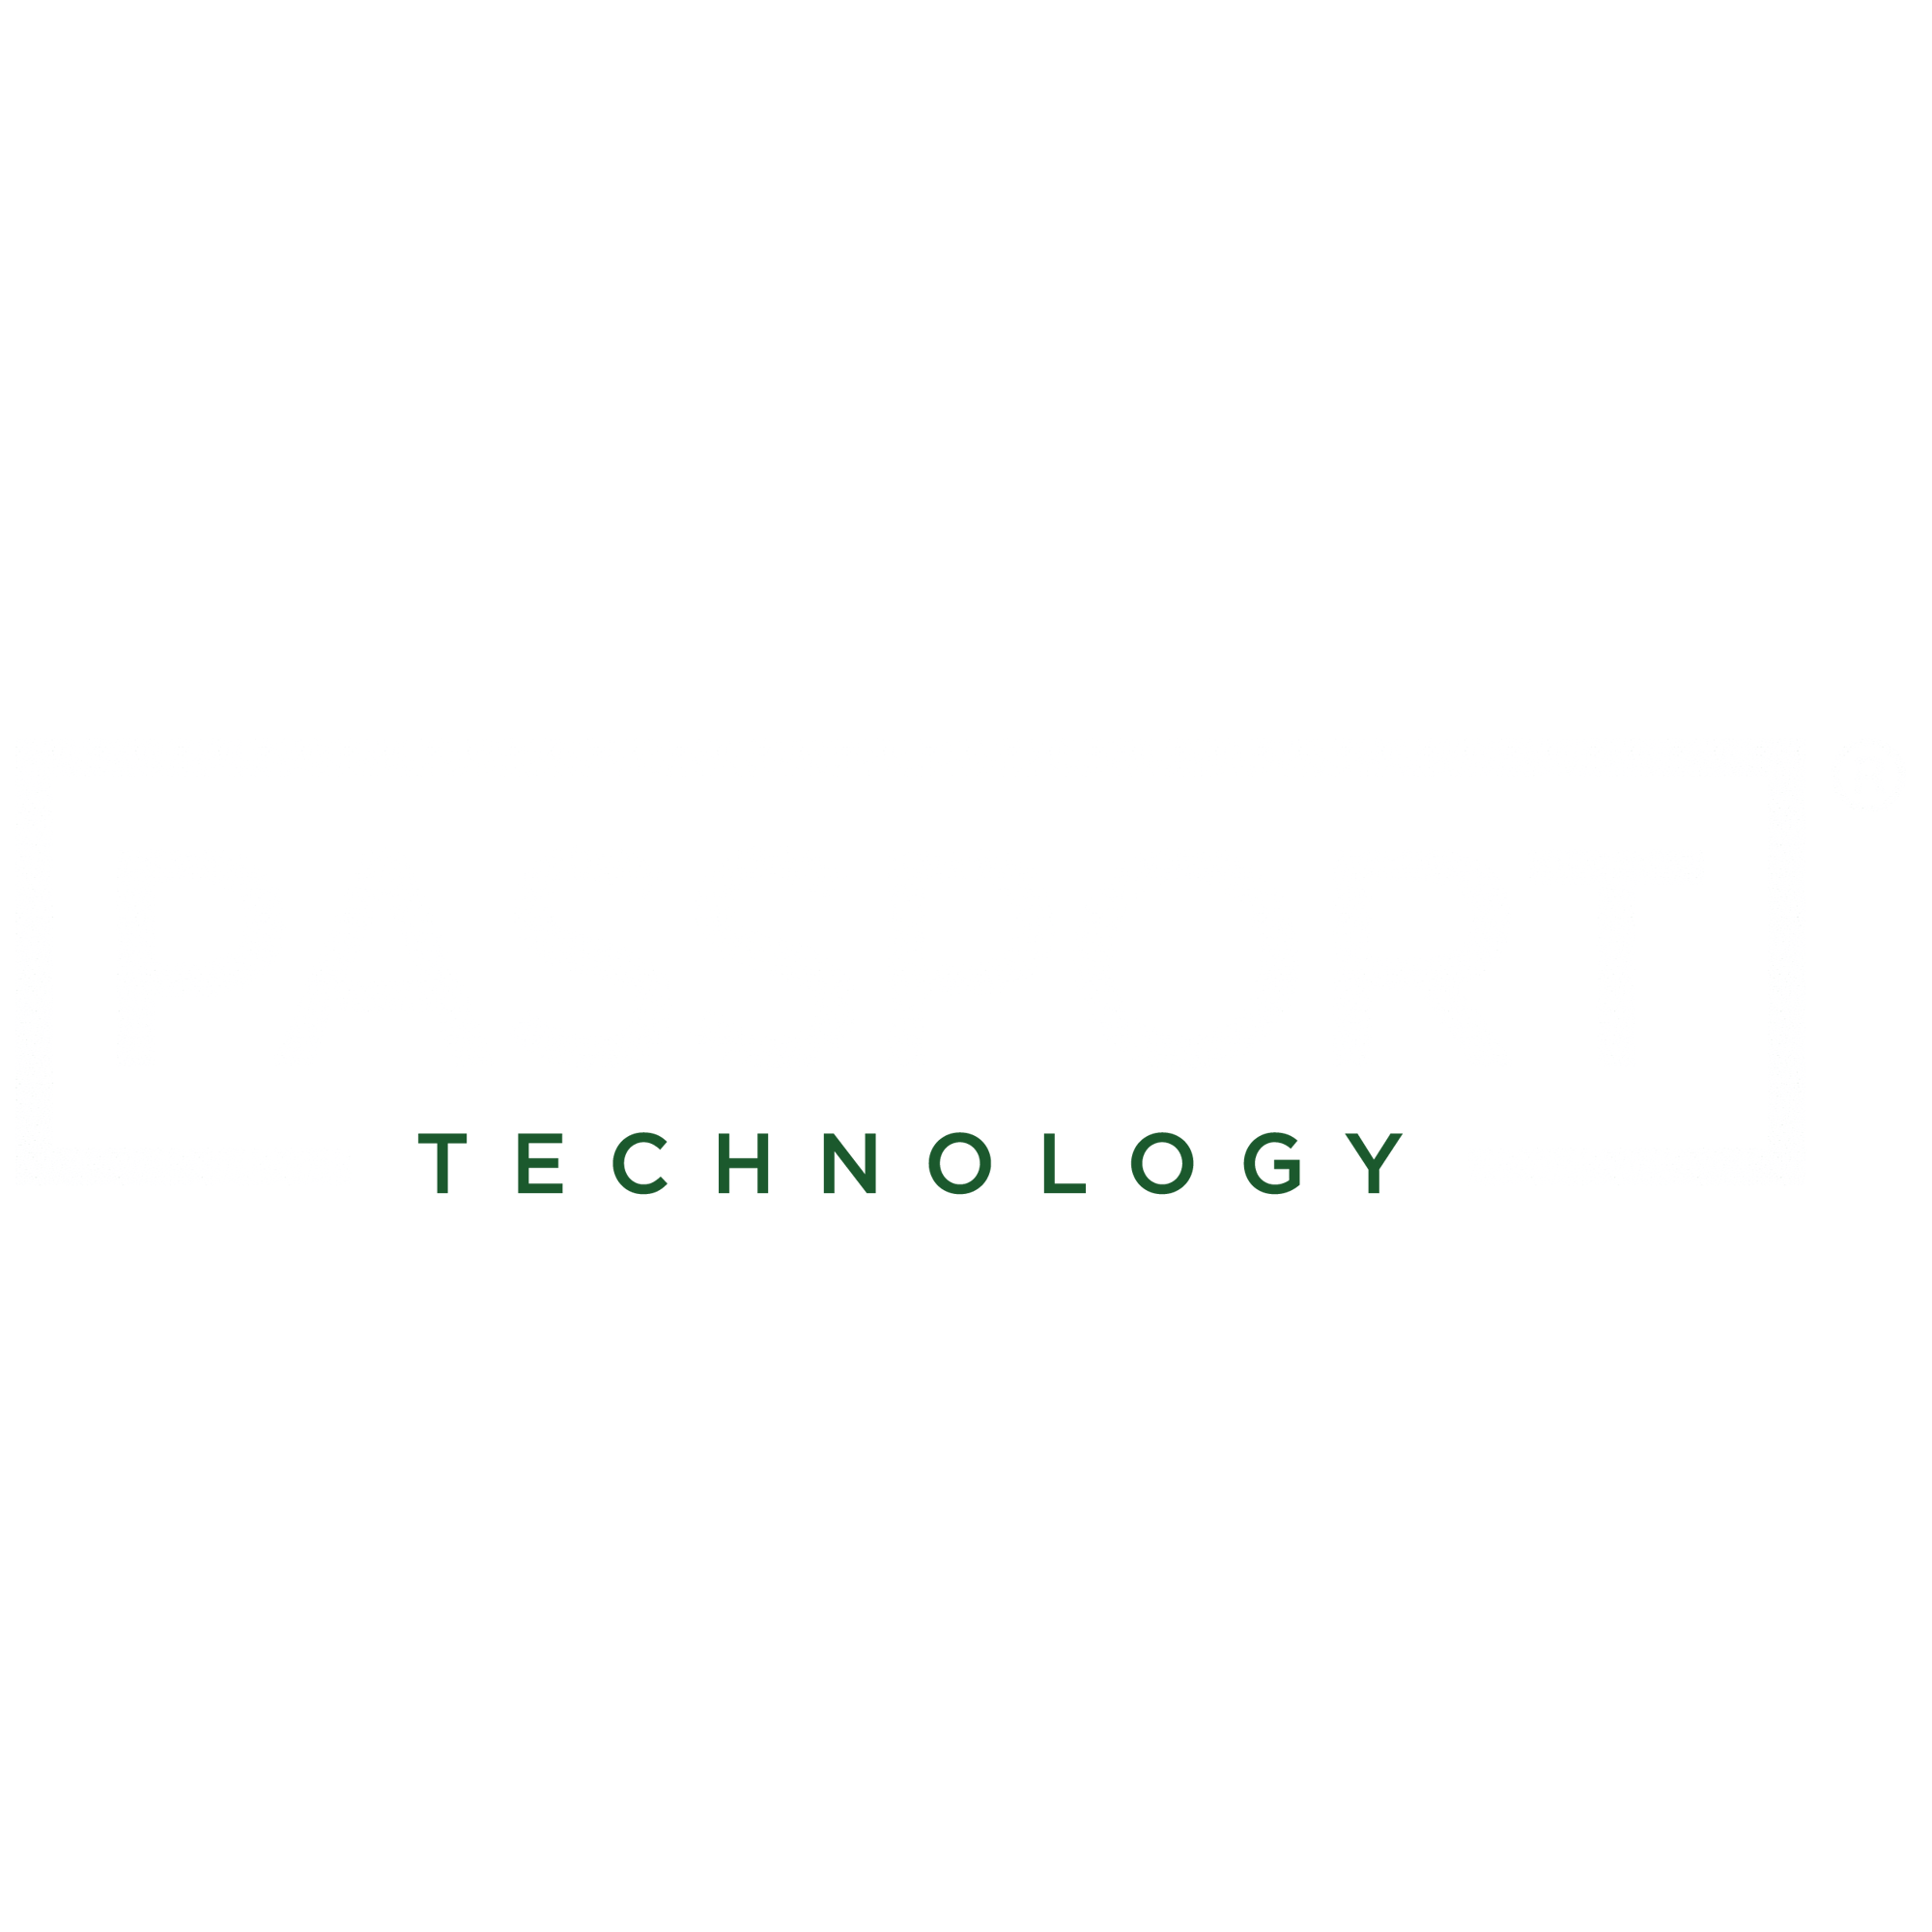 Passport Technology Logo white